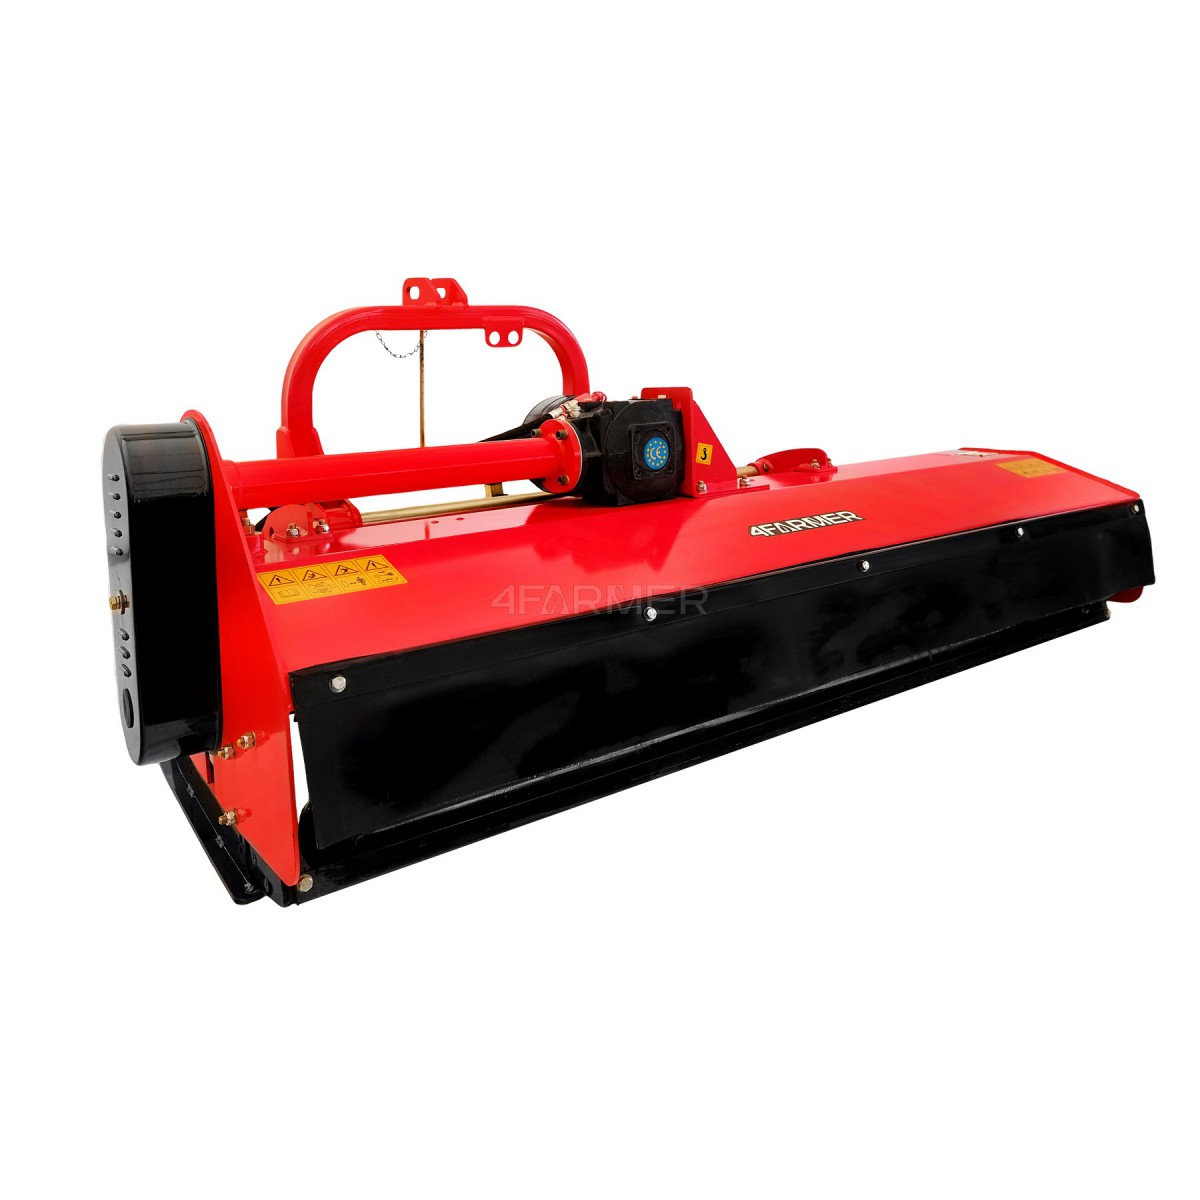 Flail mower with a hydraulic shift DPH 205 4FARMER